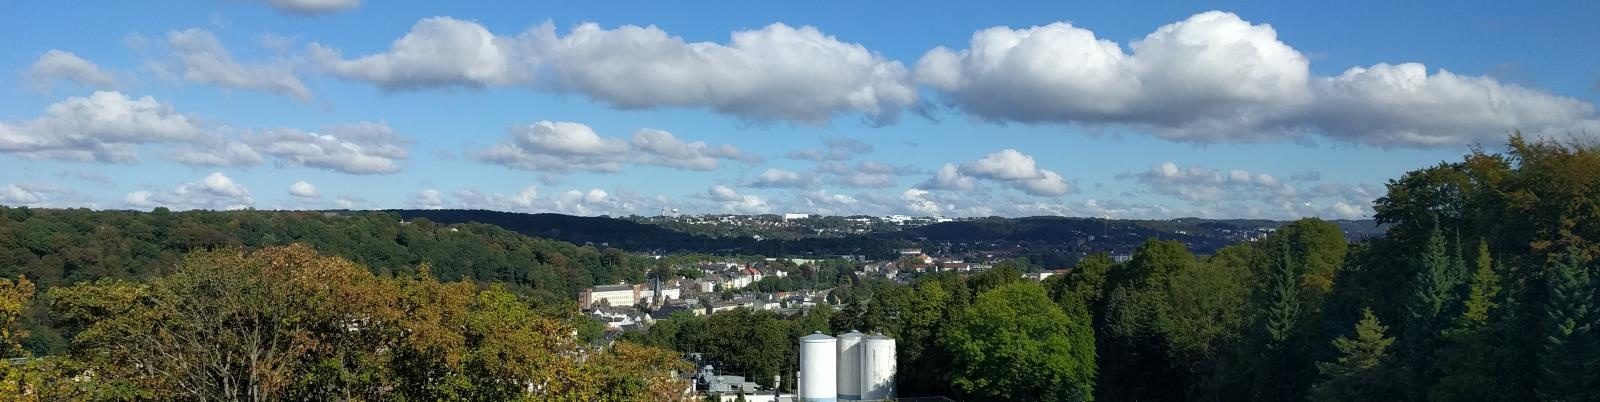 Vista aerea della sede produttiva di Axalta Energy Solutions a Wuppertal, Germania